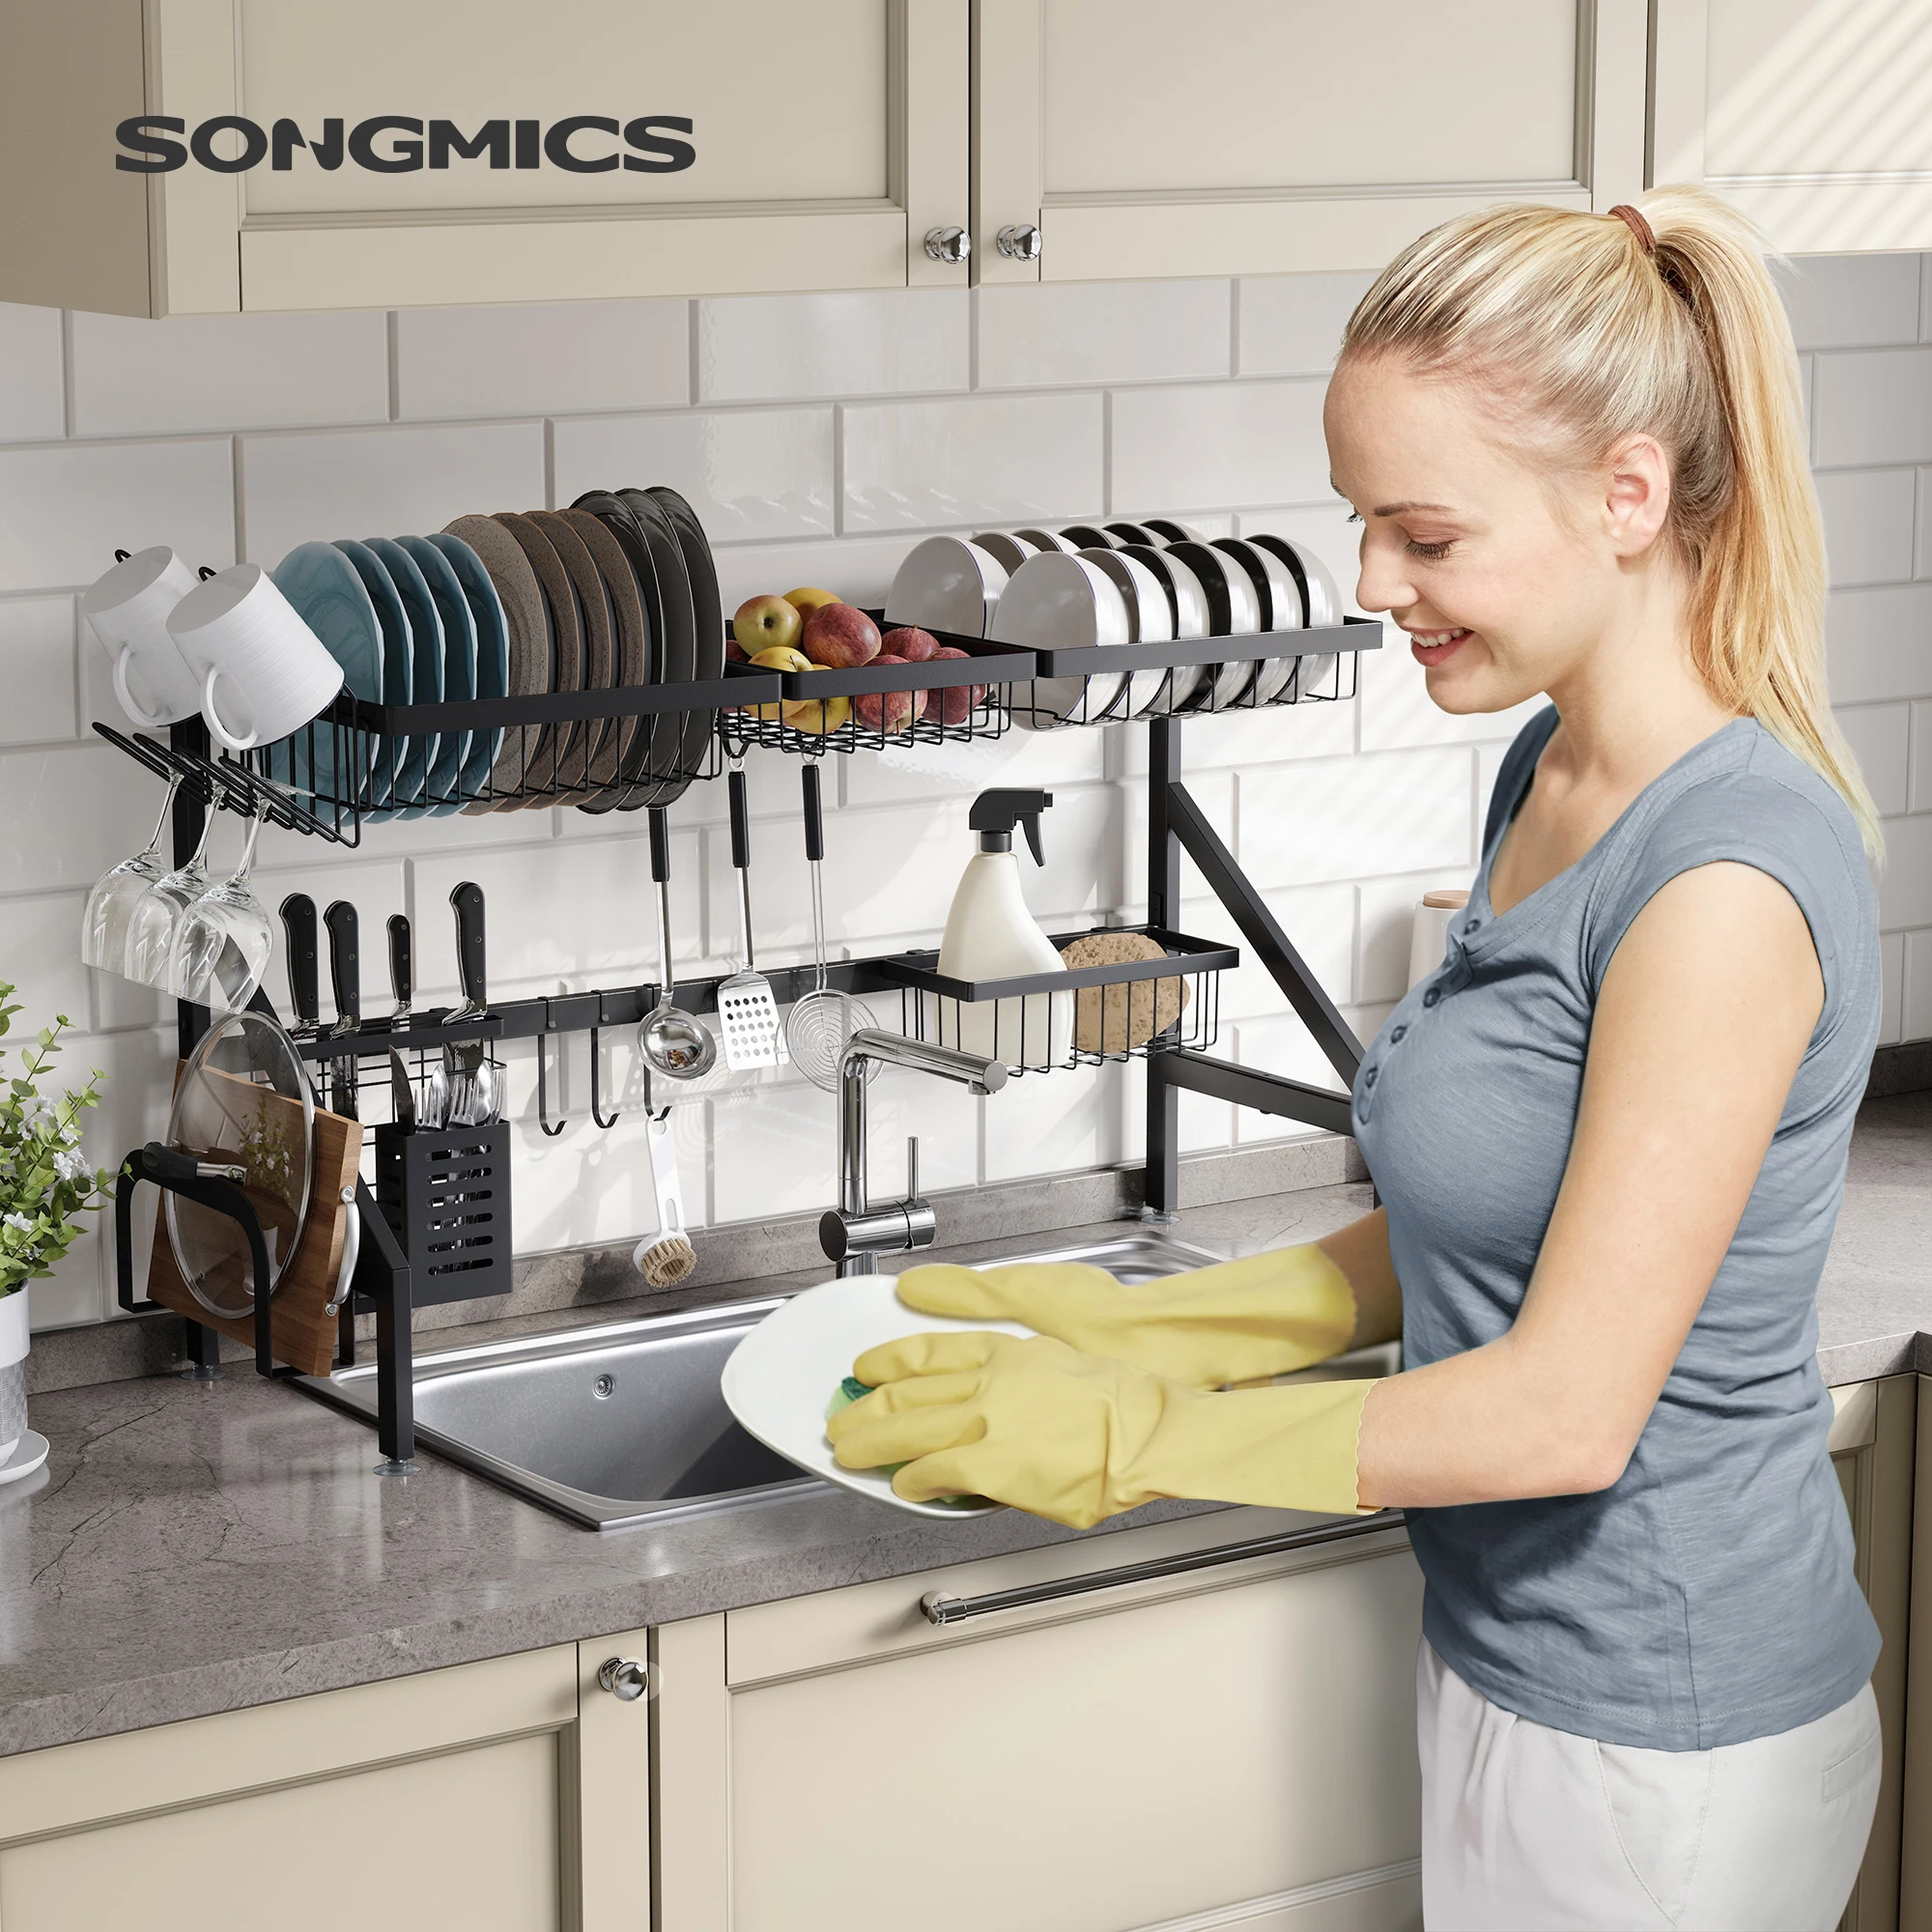 SONGMICS 2-Tier Dish Drying Rack, Silver + Gray